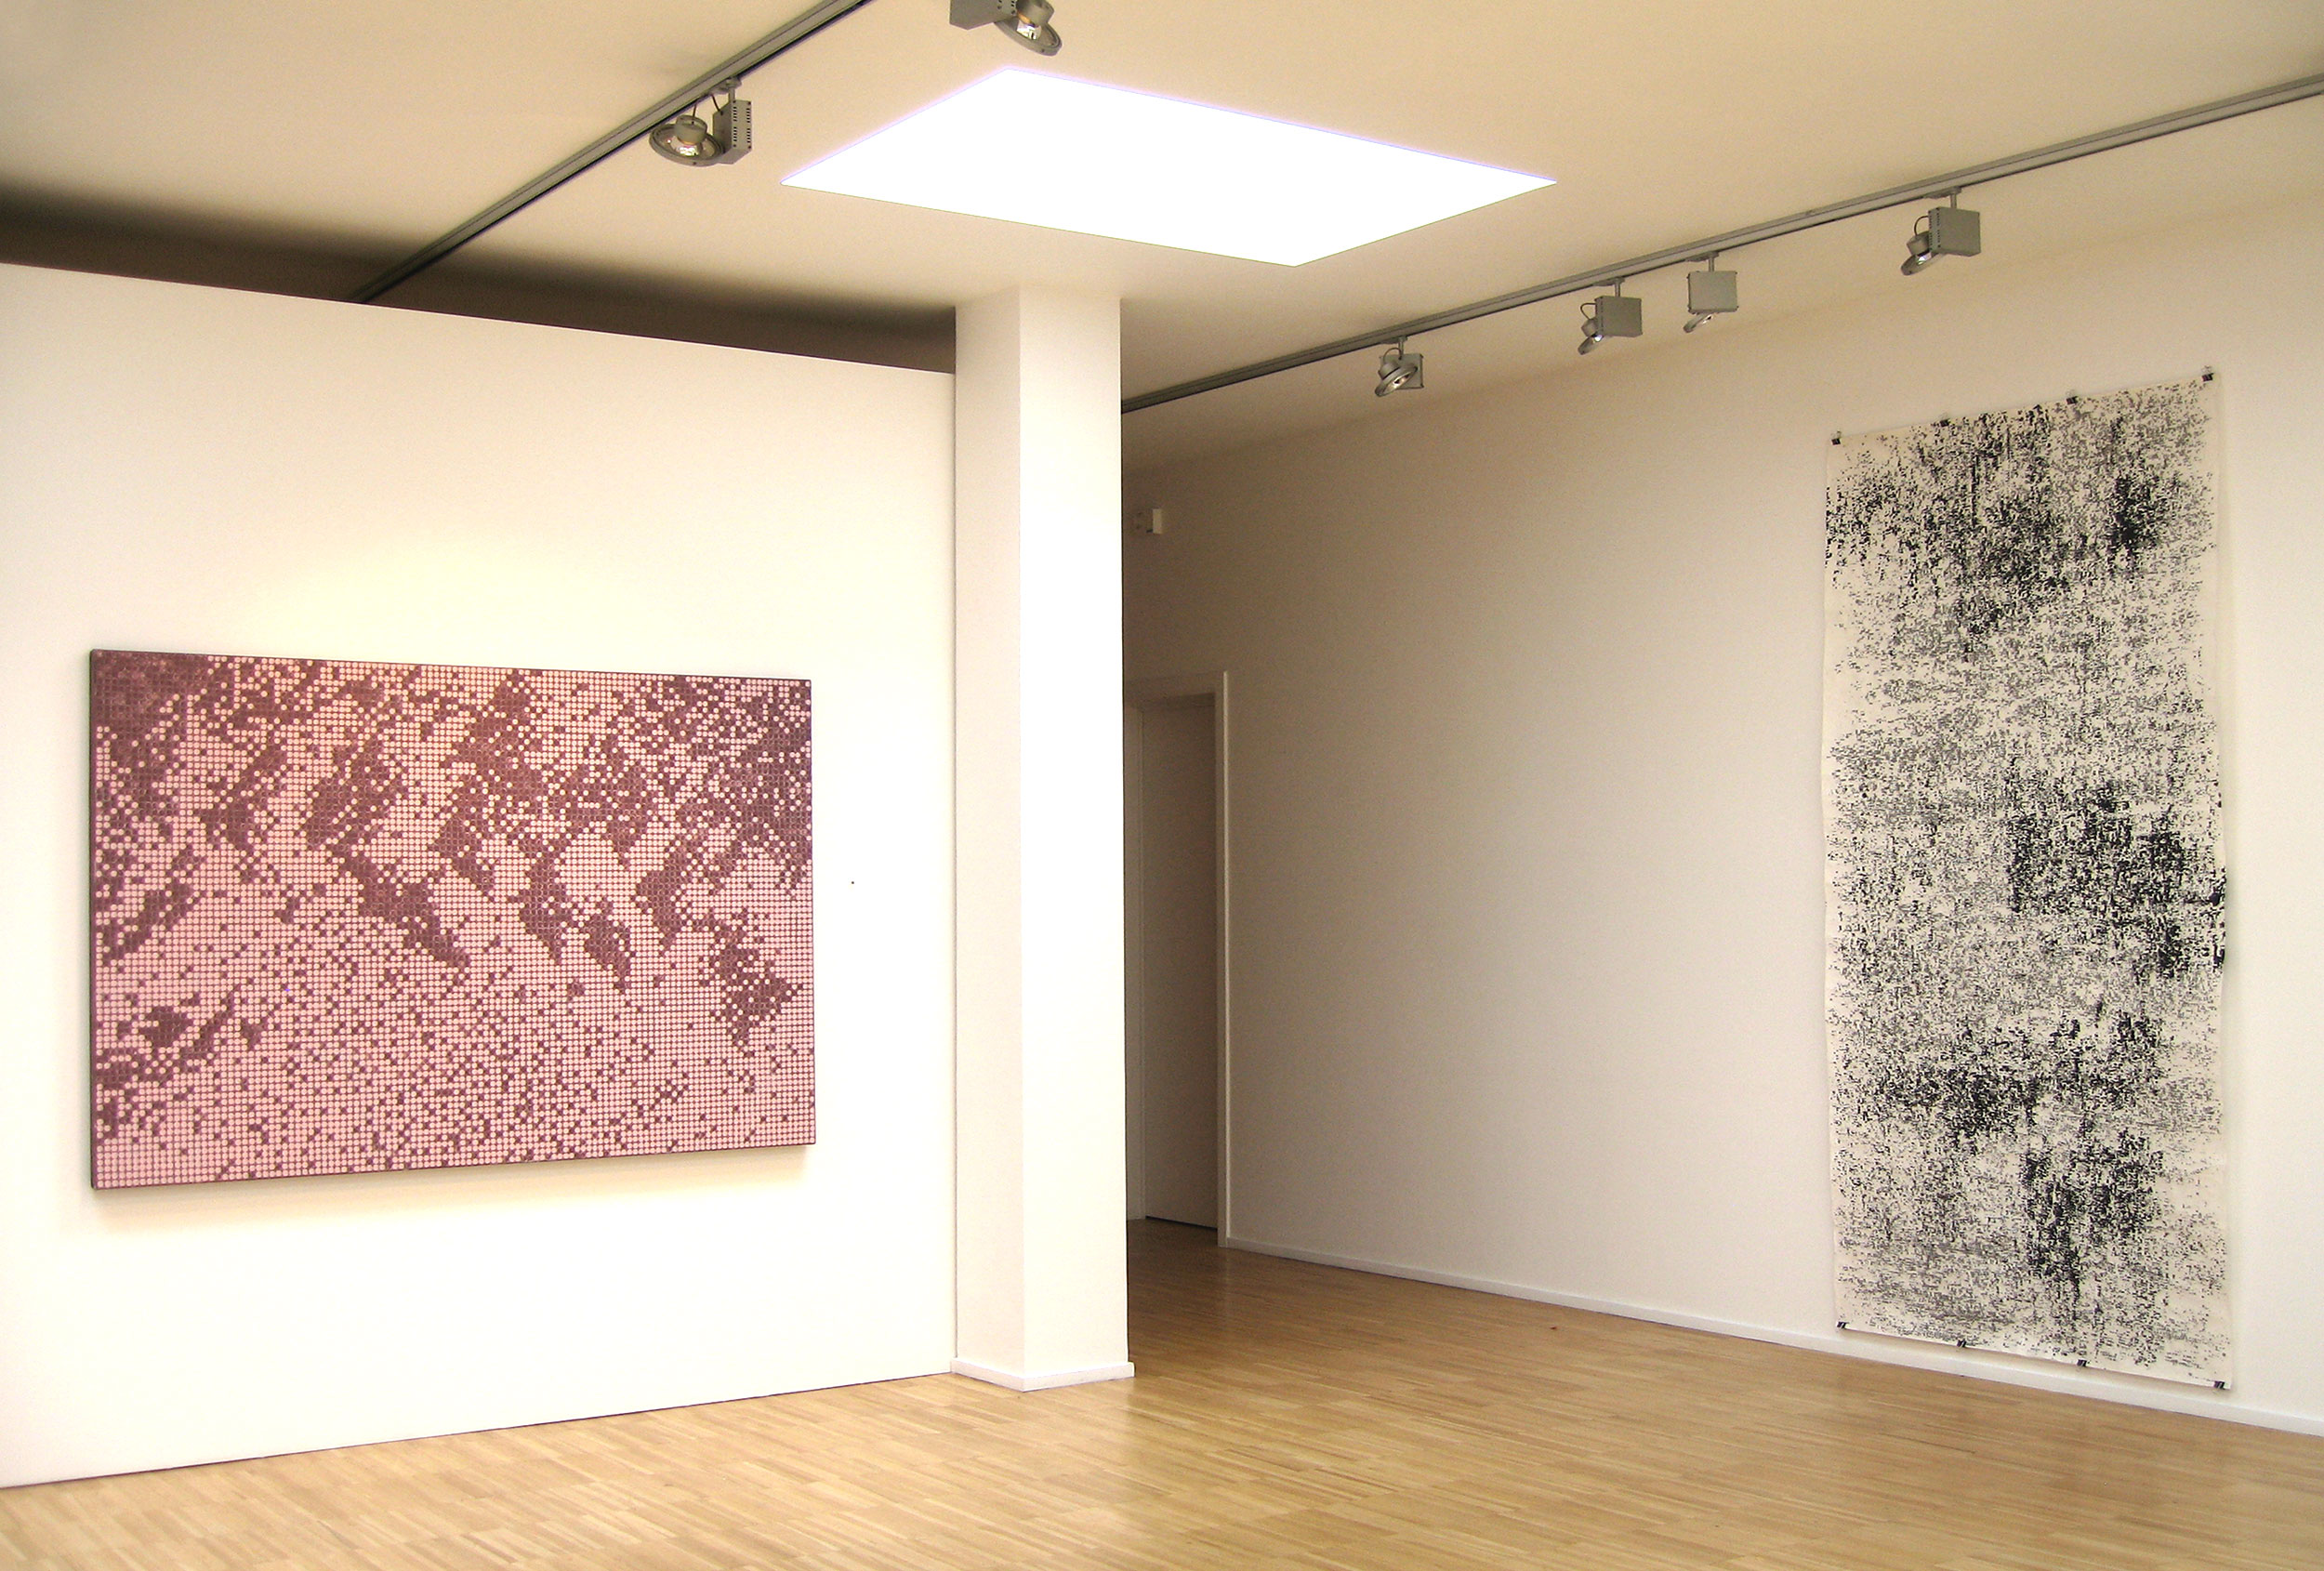 exhibition view, PAINTINK / 2008, Duqué & Pirson gallery, Brussels